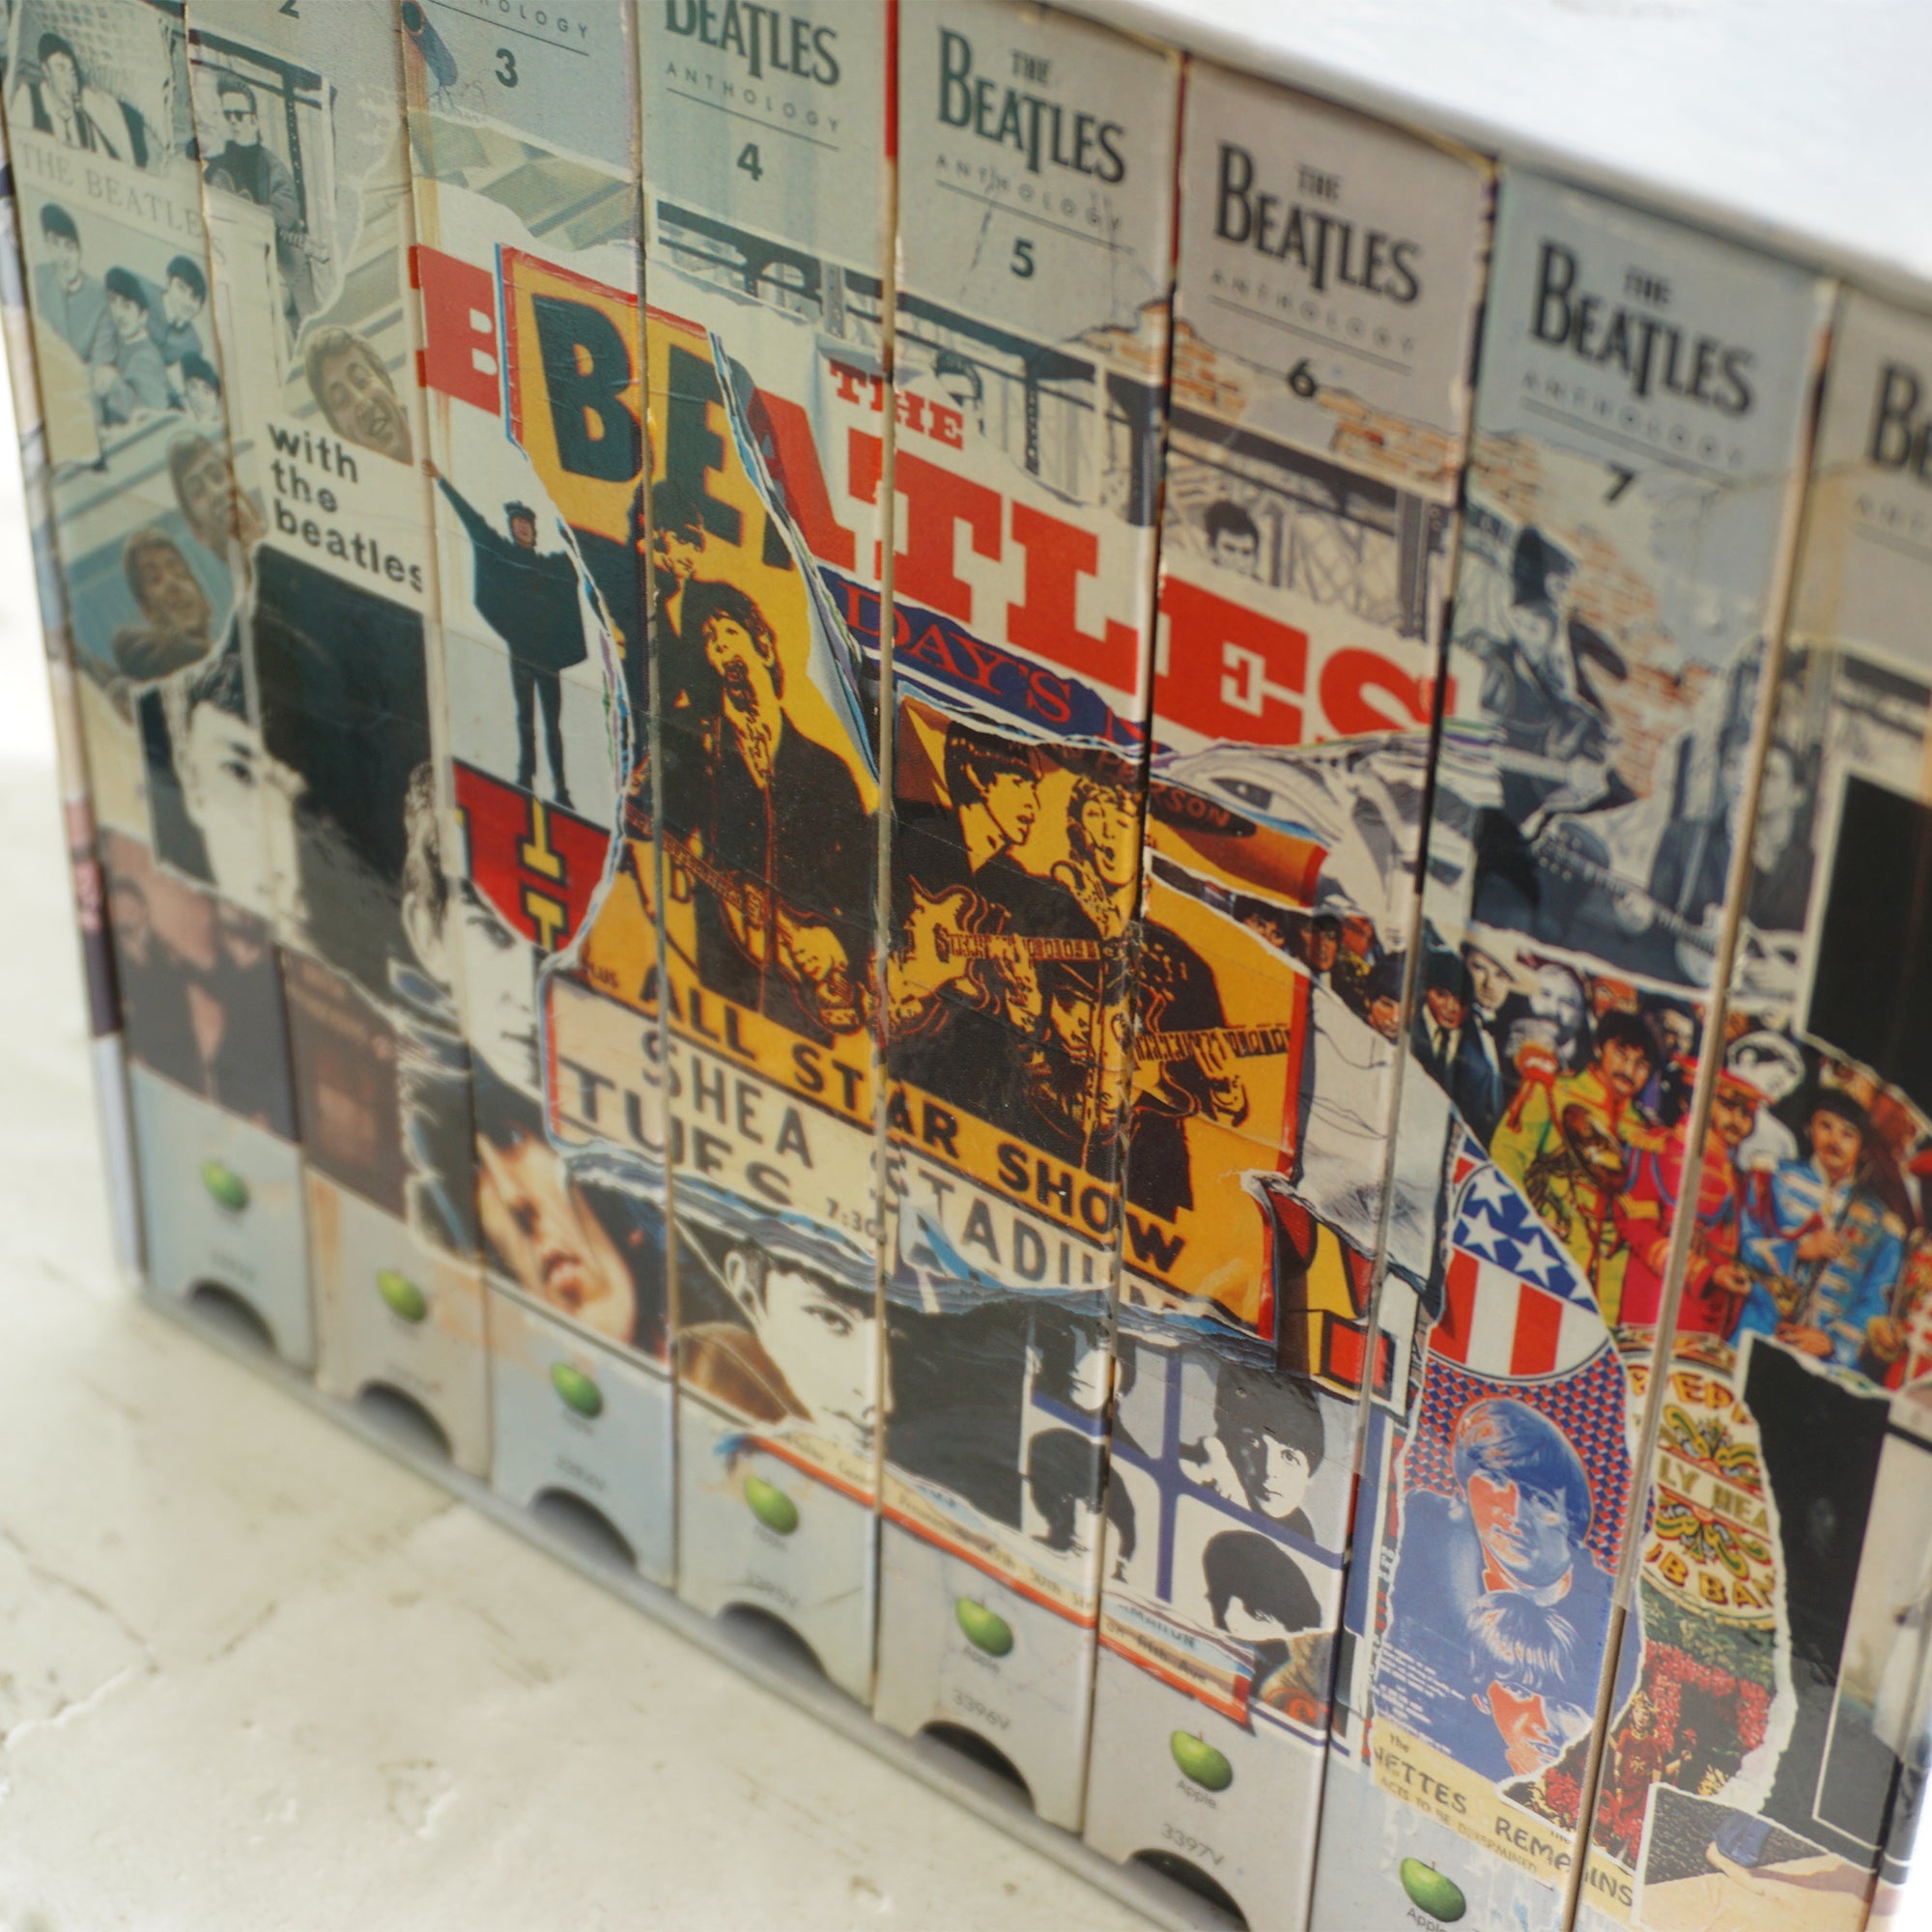 1996 Vintage APPLE CORPS The Beatles Anthology 8 VHS Tape Set